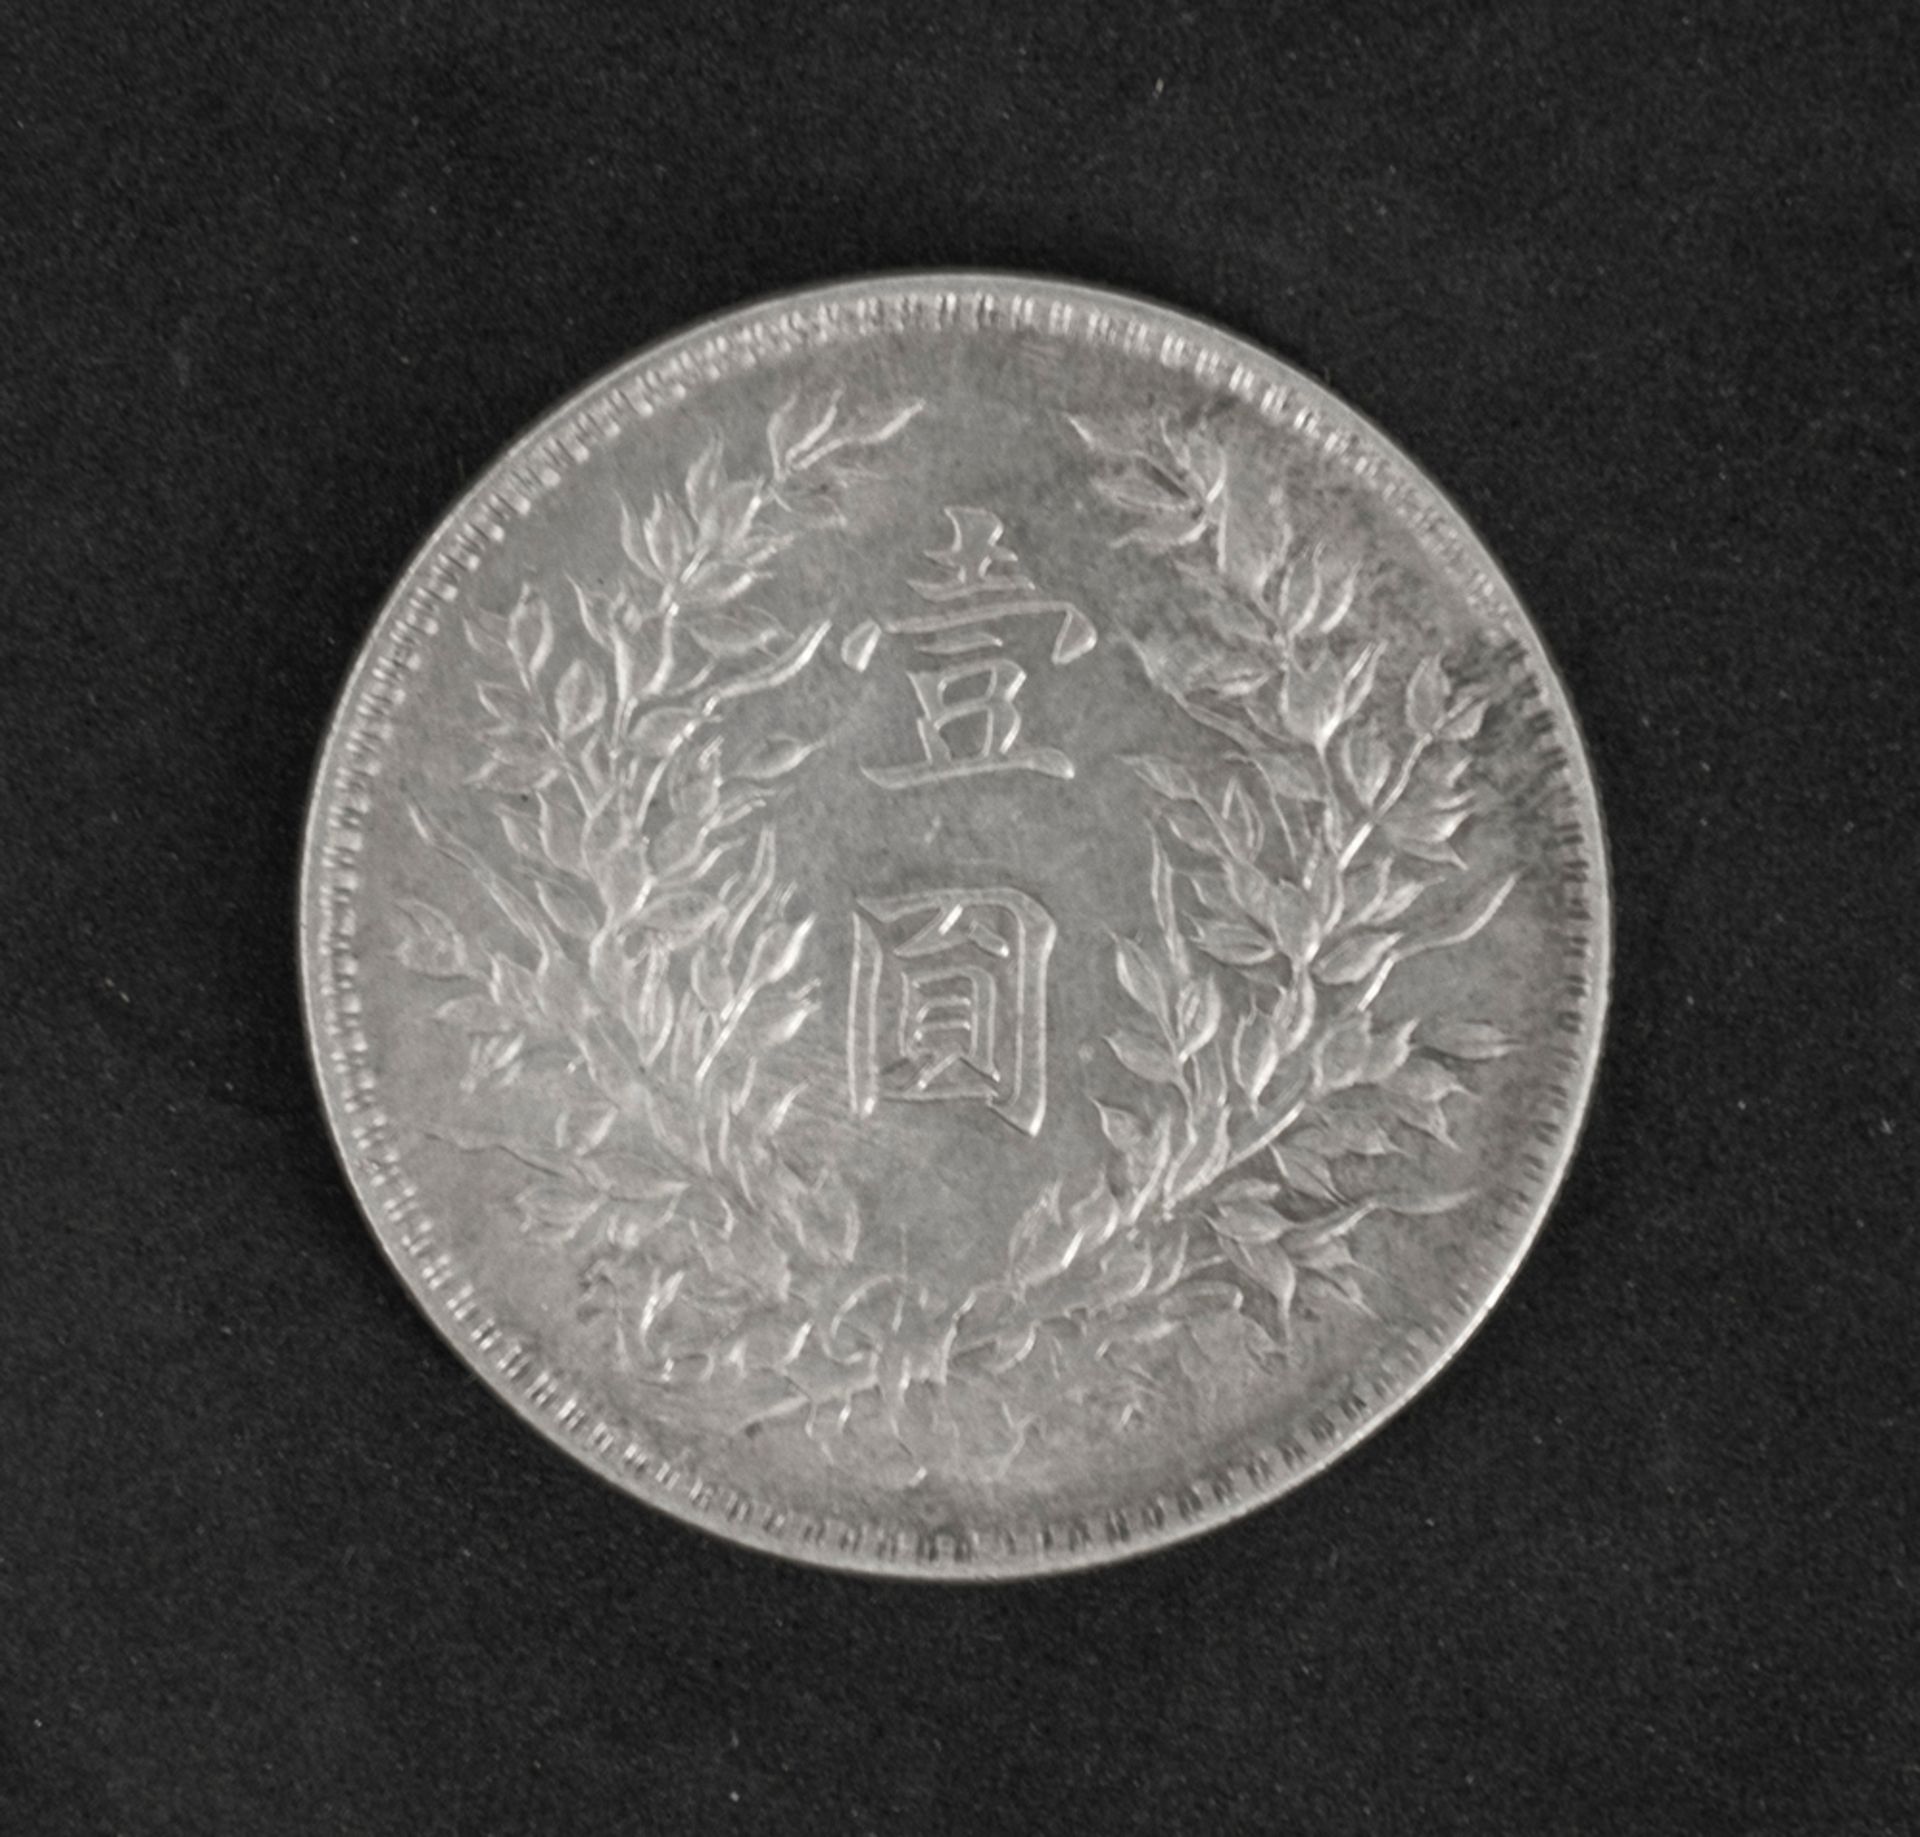 China Republik, 1 Dollar "Shih Kai (Fat Man). Silber. Erhaltung: ss. - Bild 2 aus 2